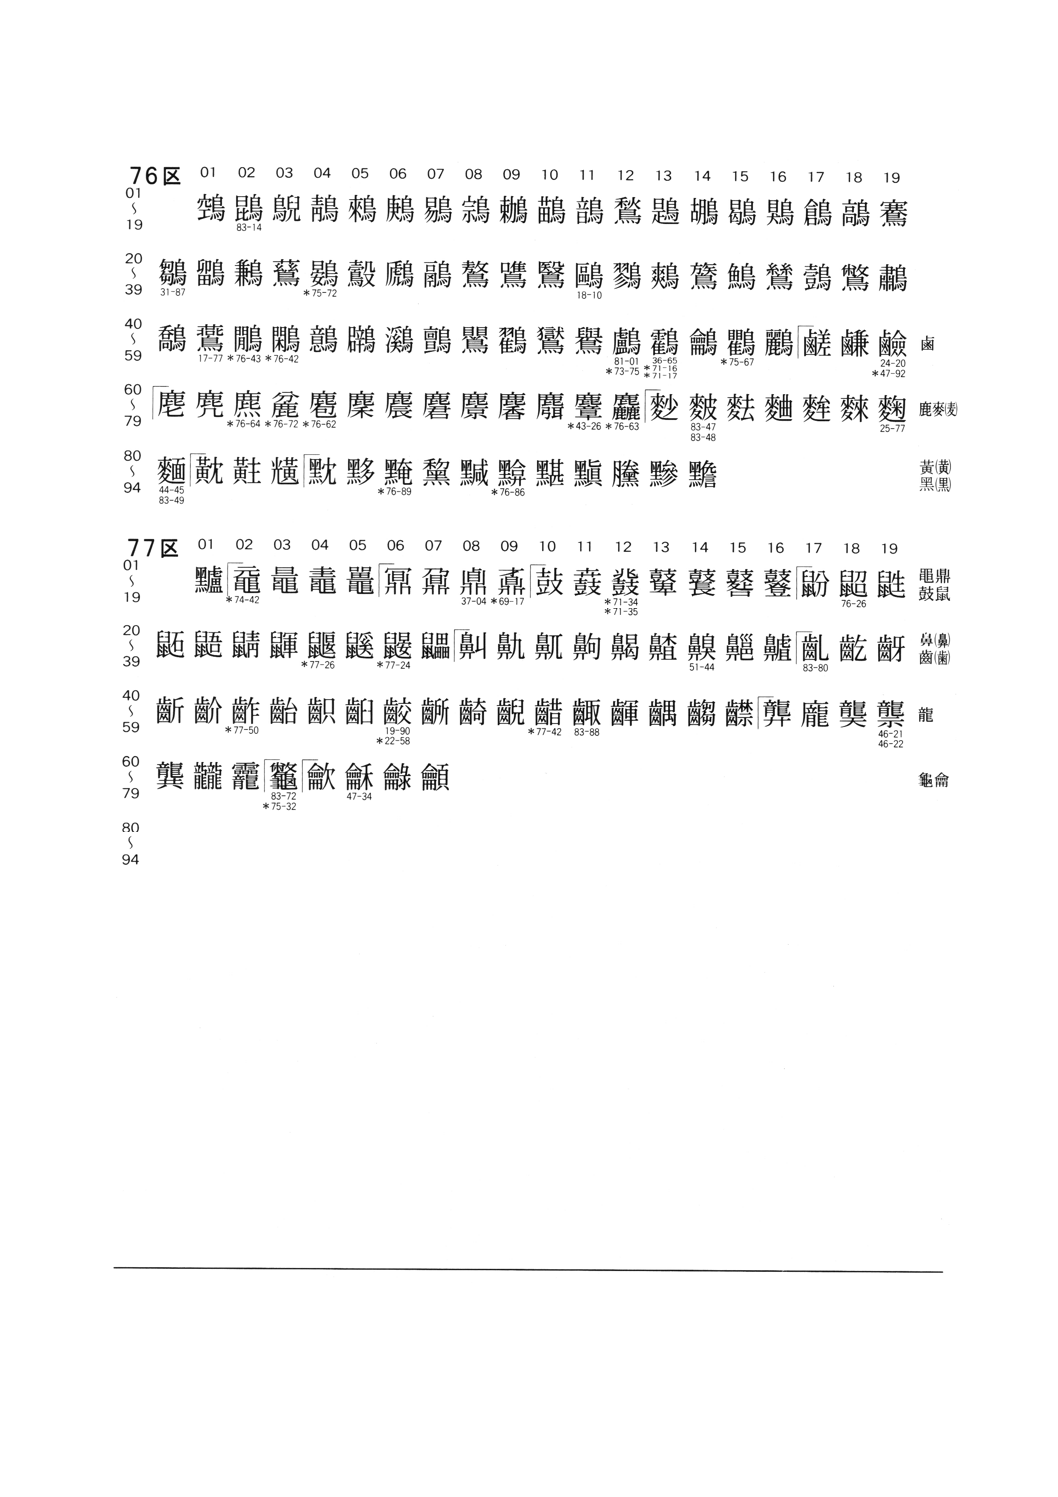 JISX0212:1990 情報交換用漢字符号－補助漢字